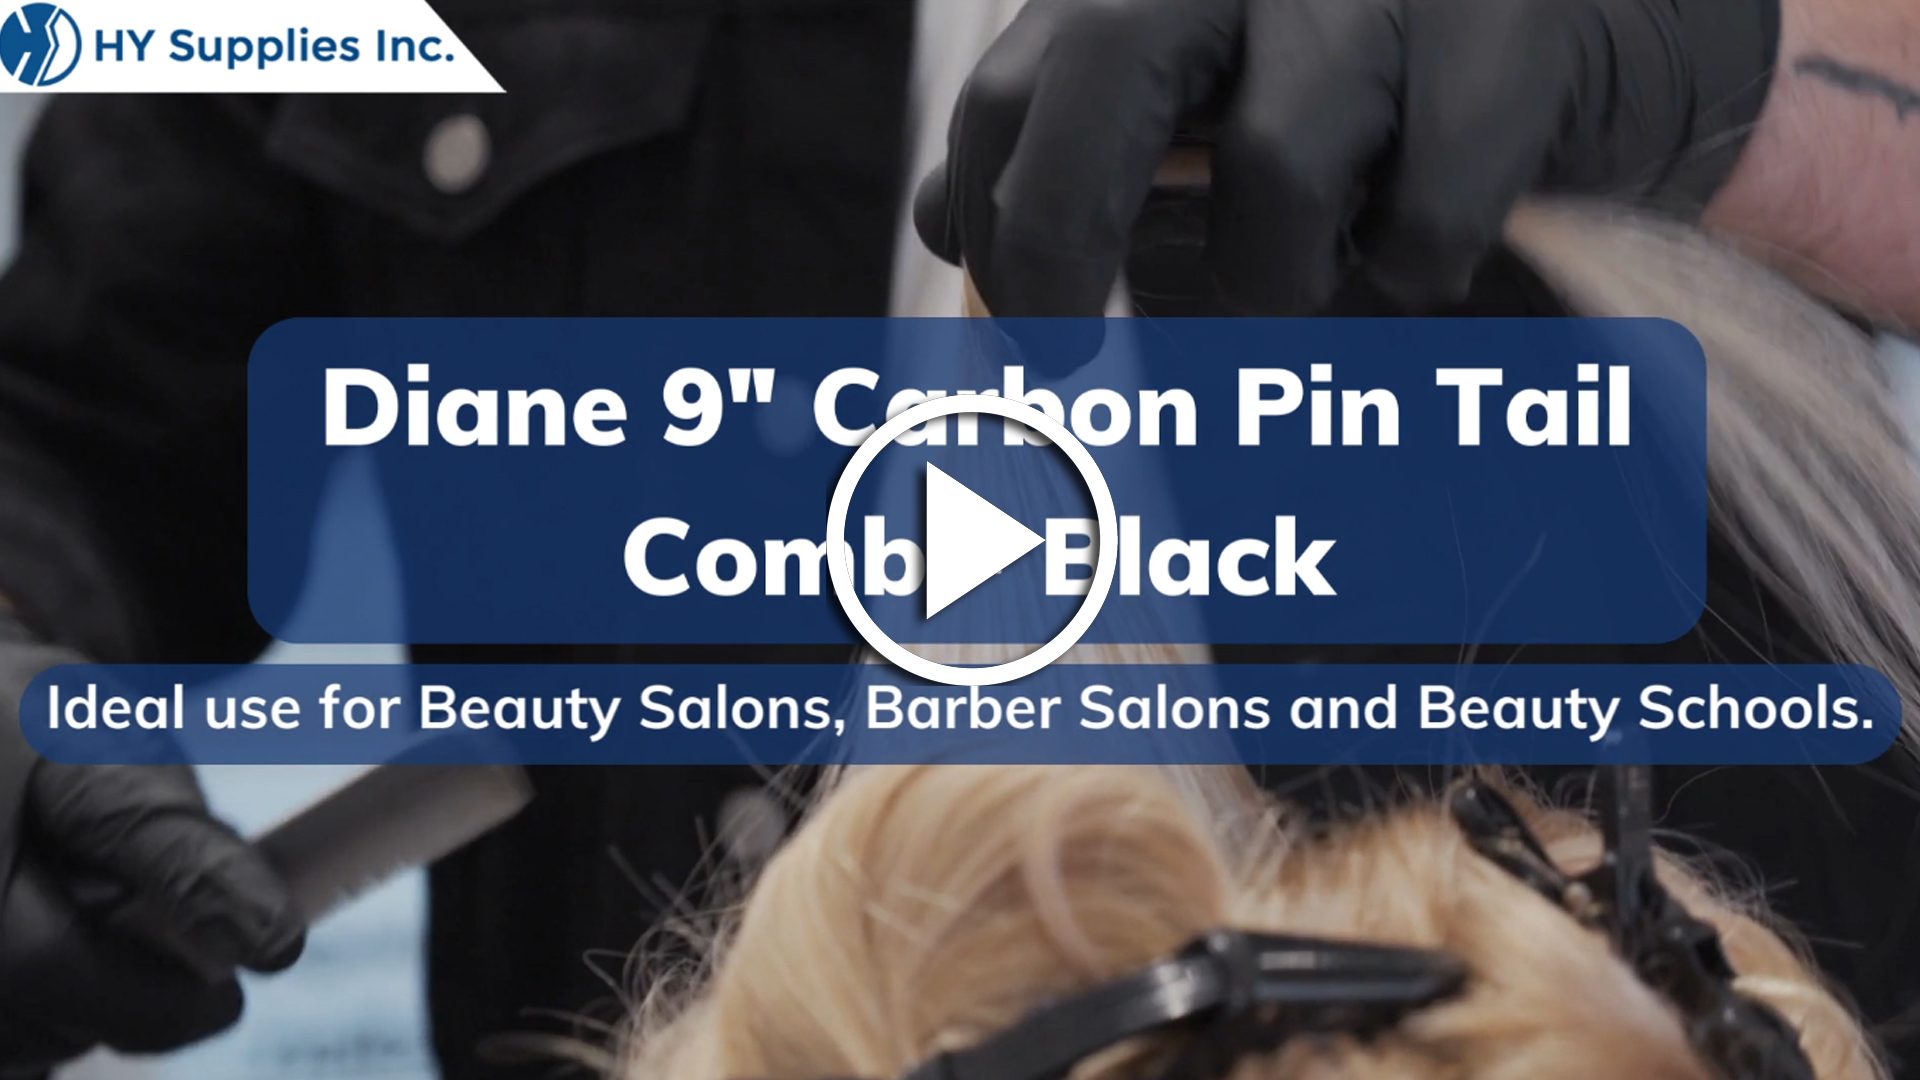 Diane 9"Carbon Pin Tail Comb - Black